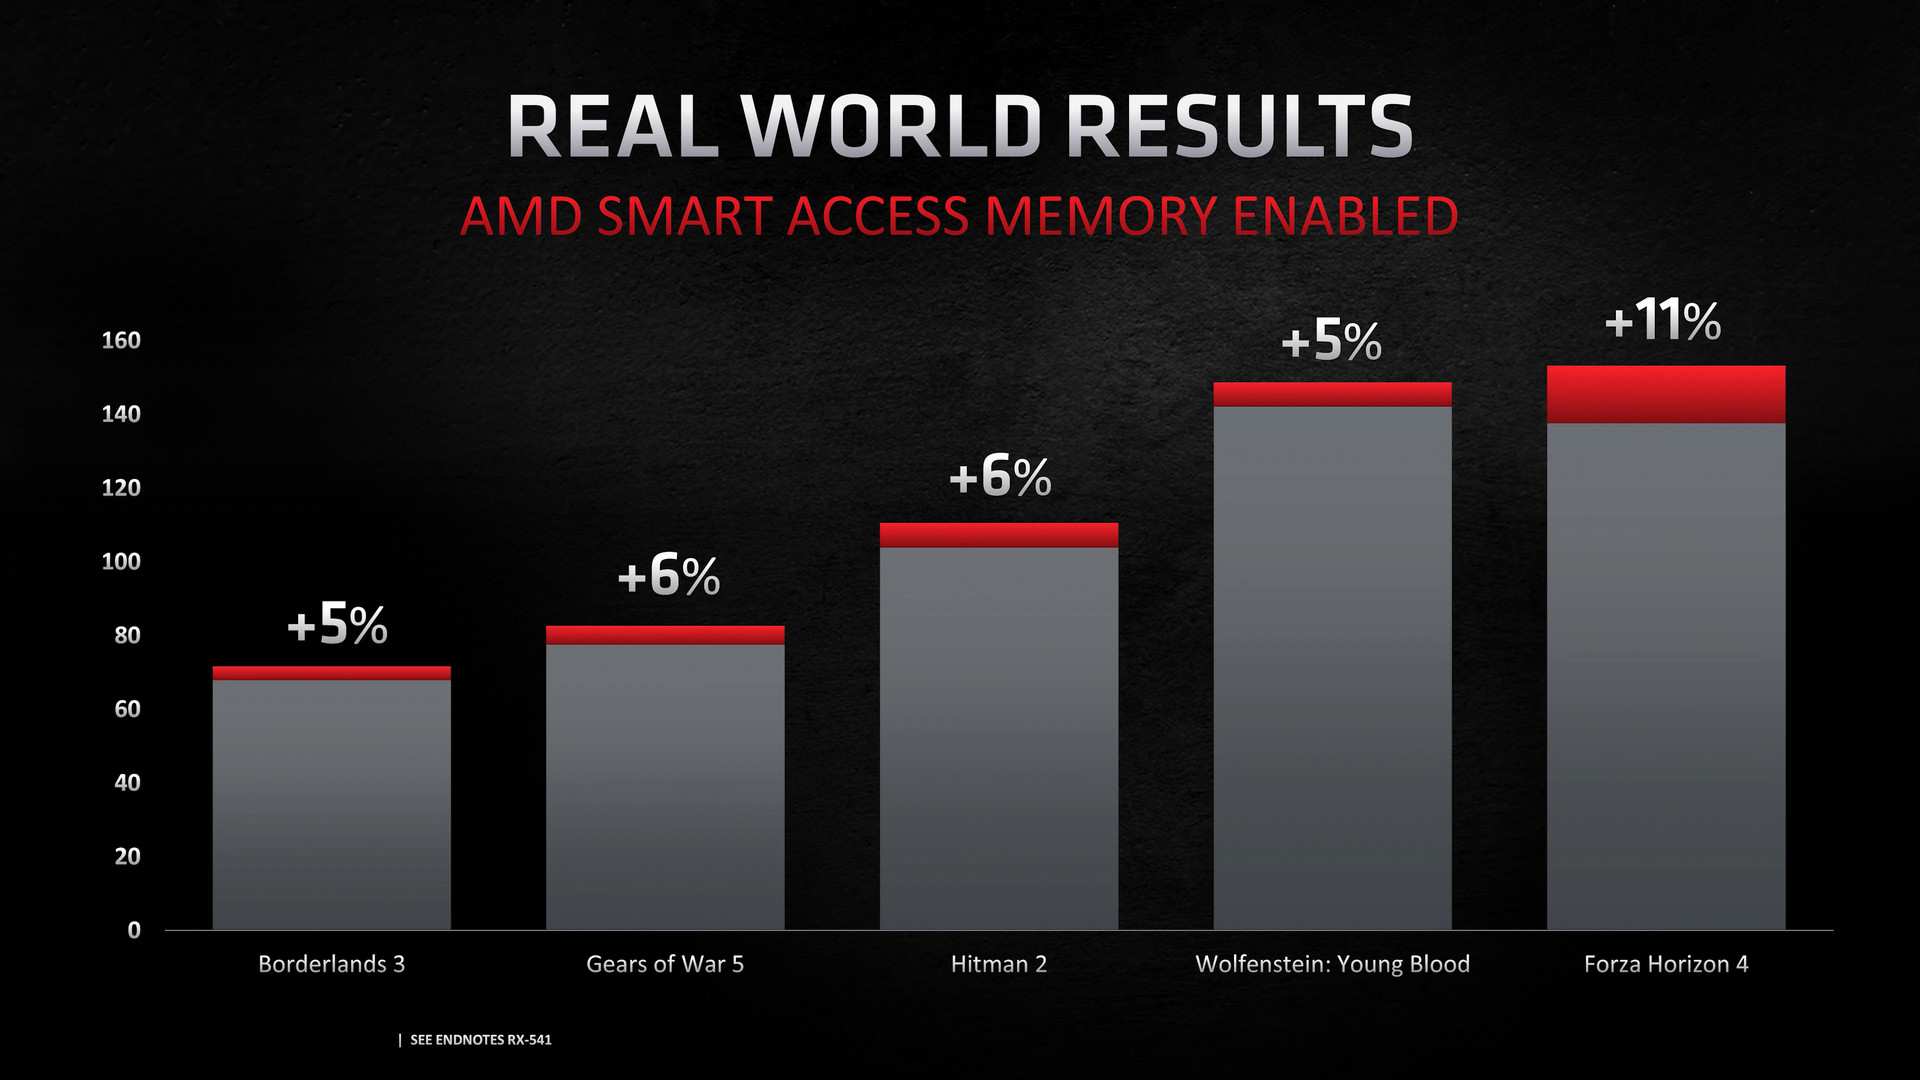 AMD Smart Access memory